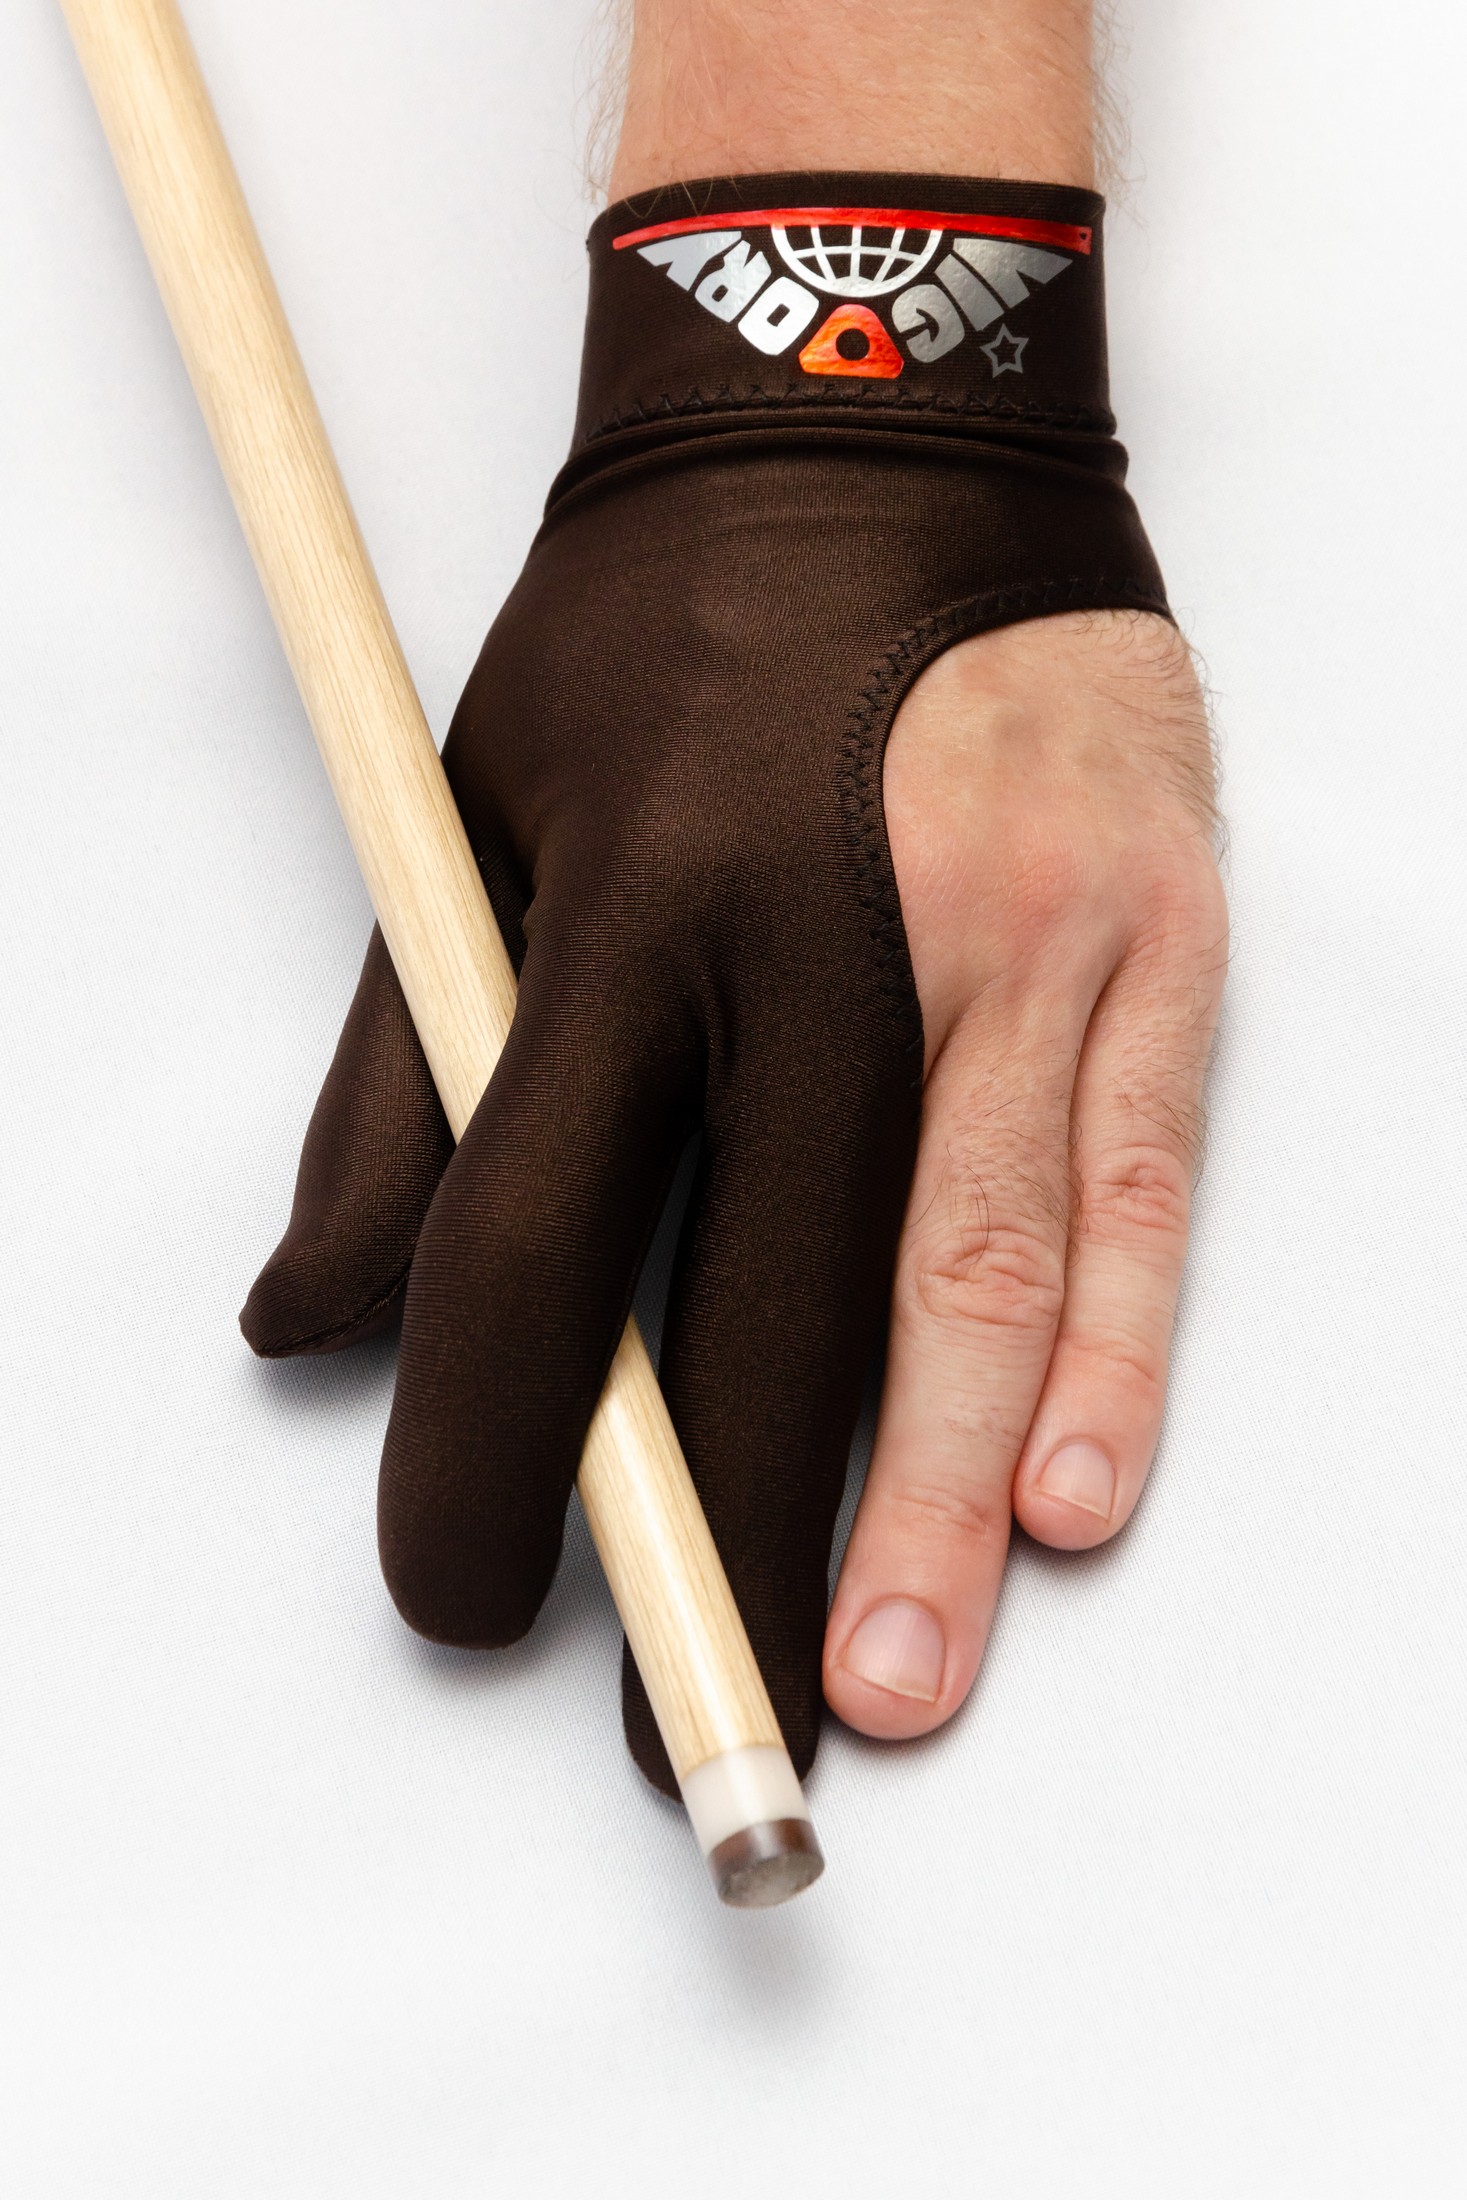 Перчатка Skiba Victory вставки на пальцах коричневая M/L